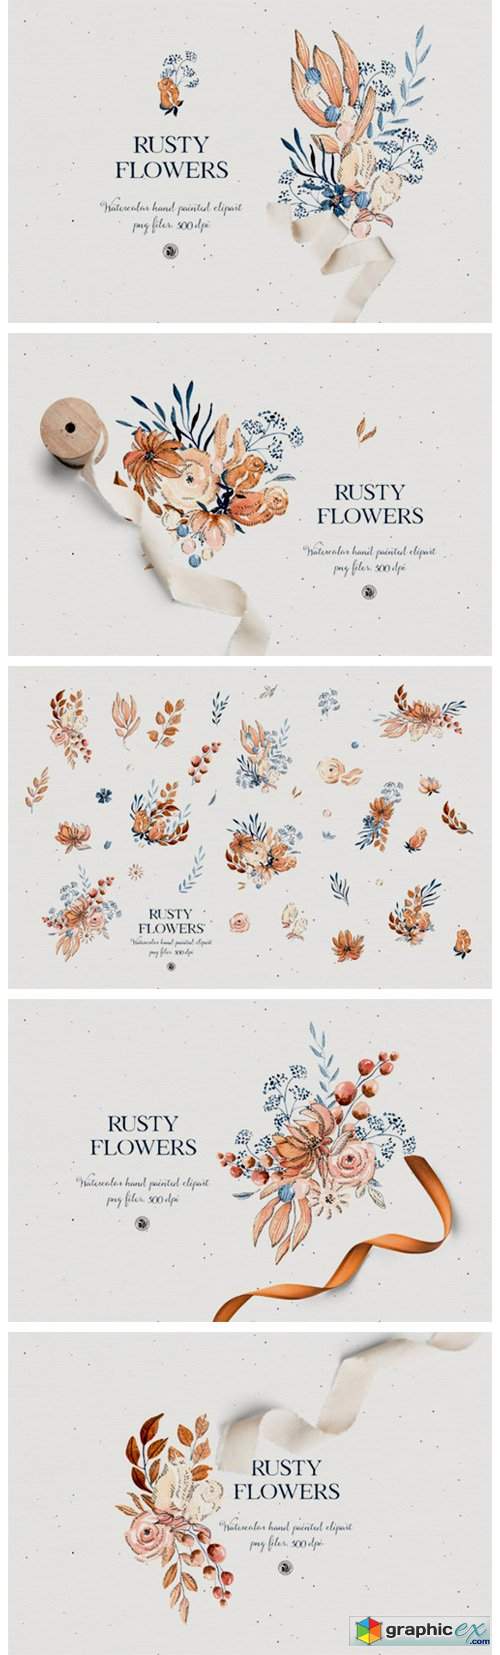  Rusty Flowers - Watercolor Set 